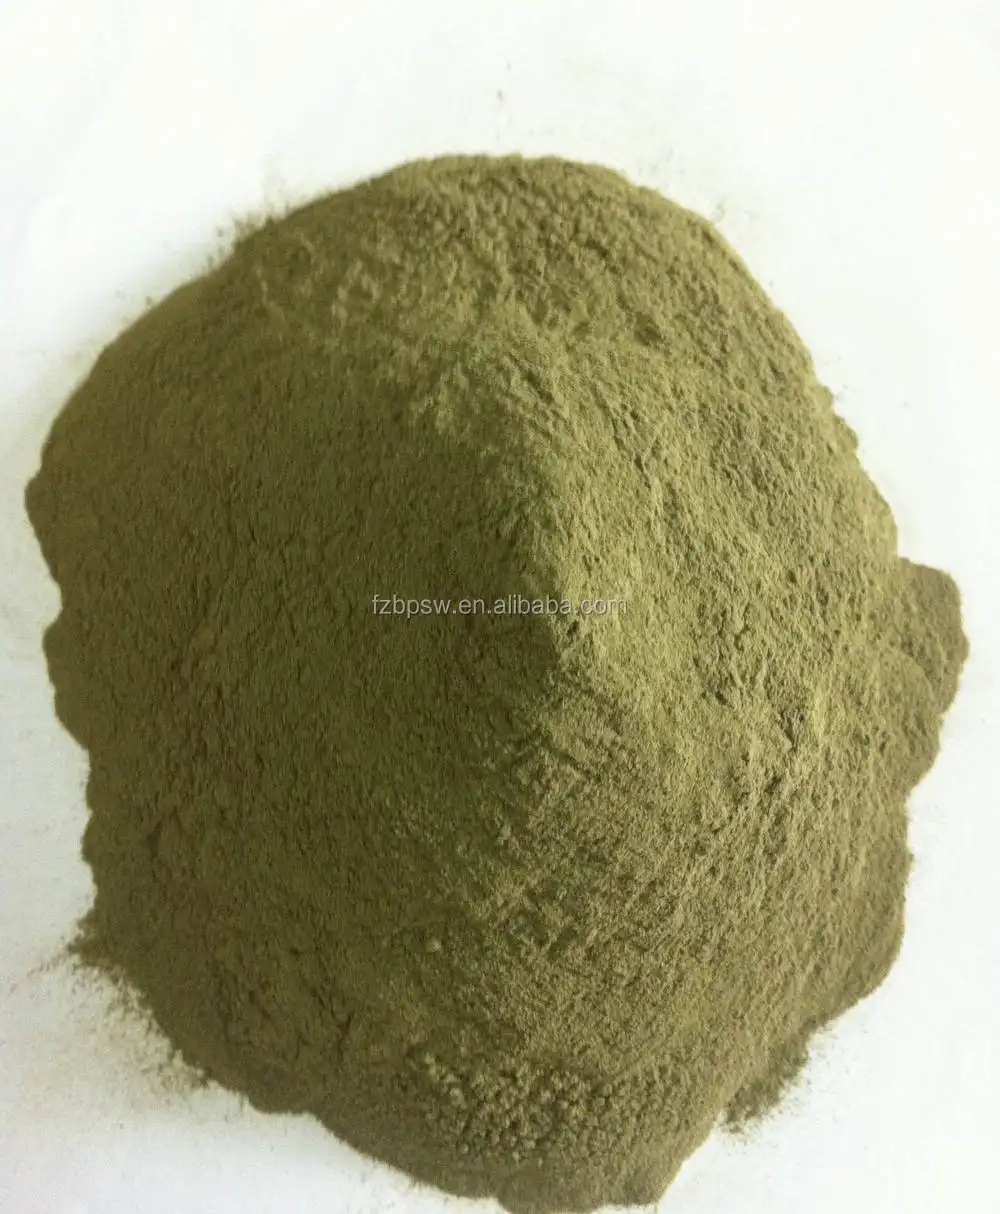 海藻ulva lactuca粉末販売、海レタス粉末飼料添加物用。